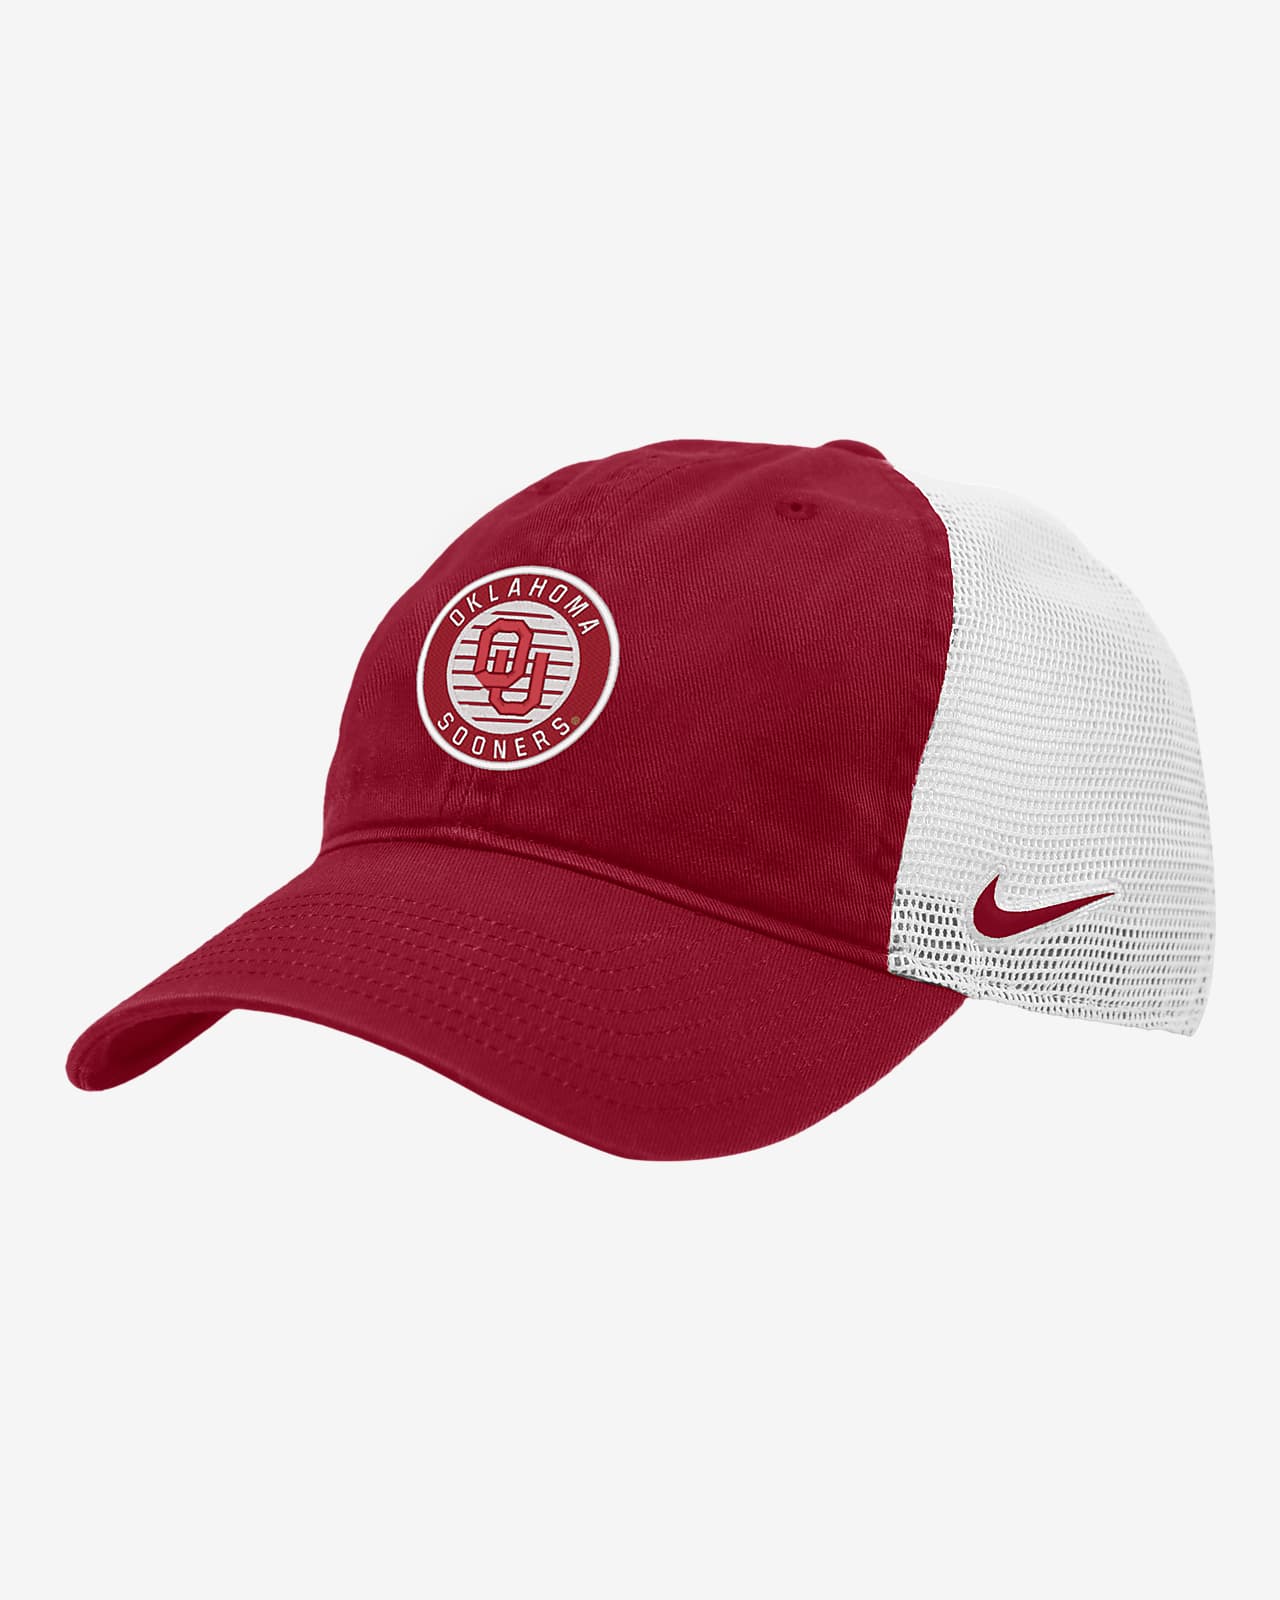 Oklahoma Heritage86 Nike College Trucker Hat